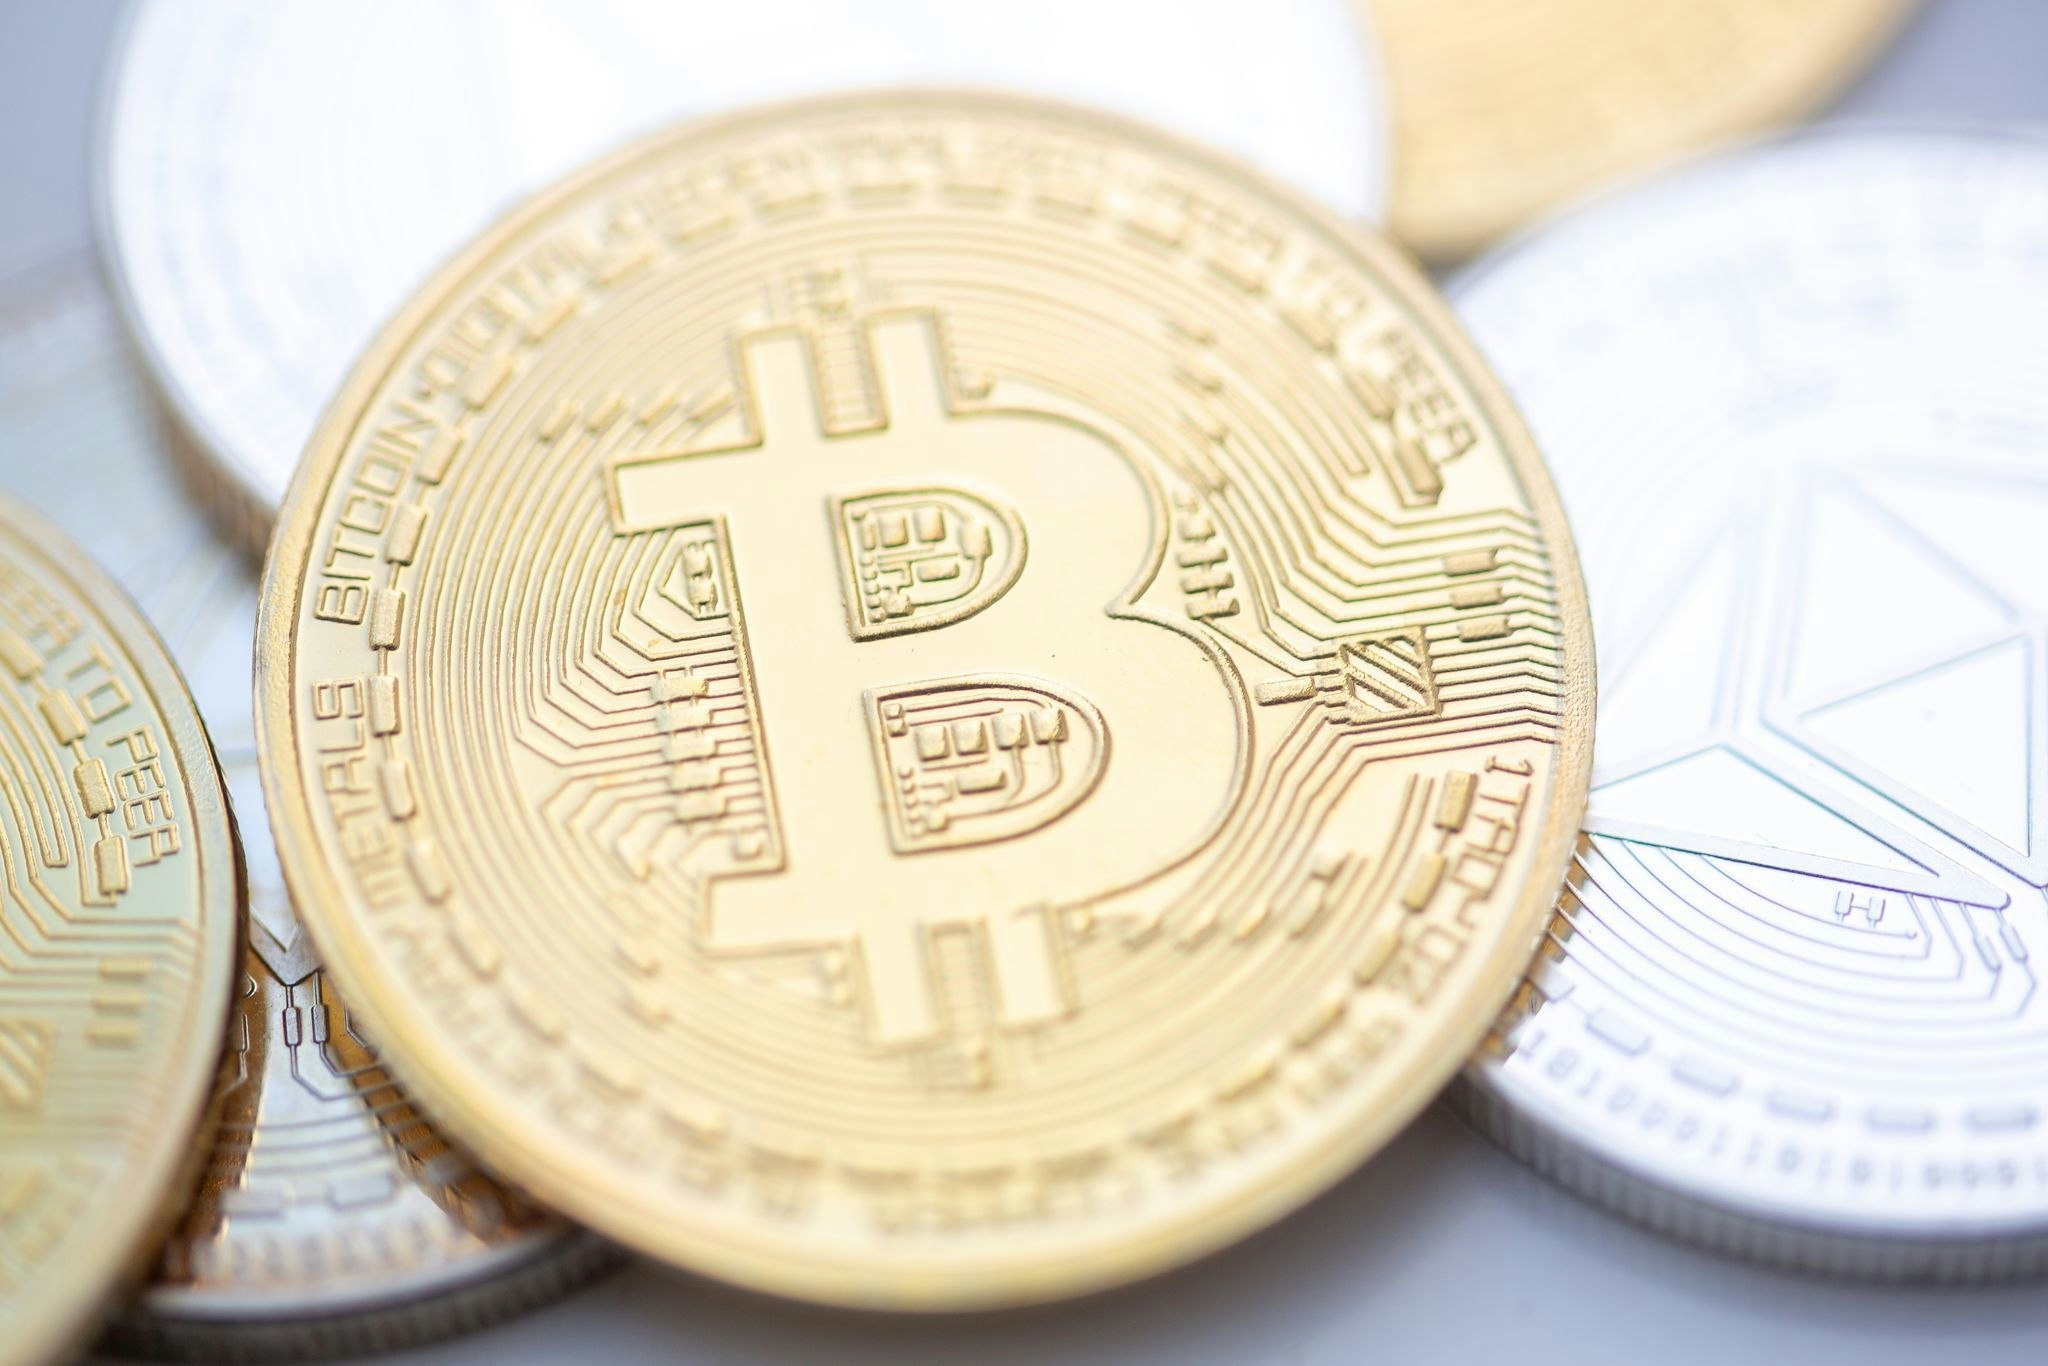 digitalwährungen: krypto-kurse sacken ab - bitcoin fällt unter 58.000 dollar